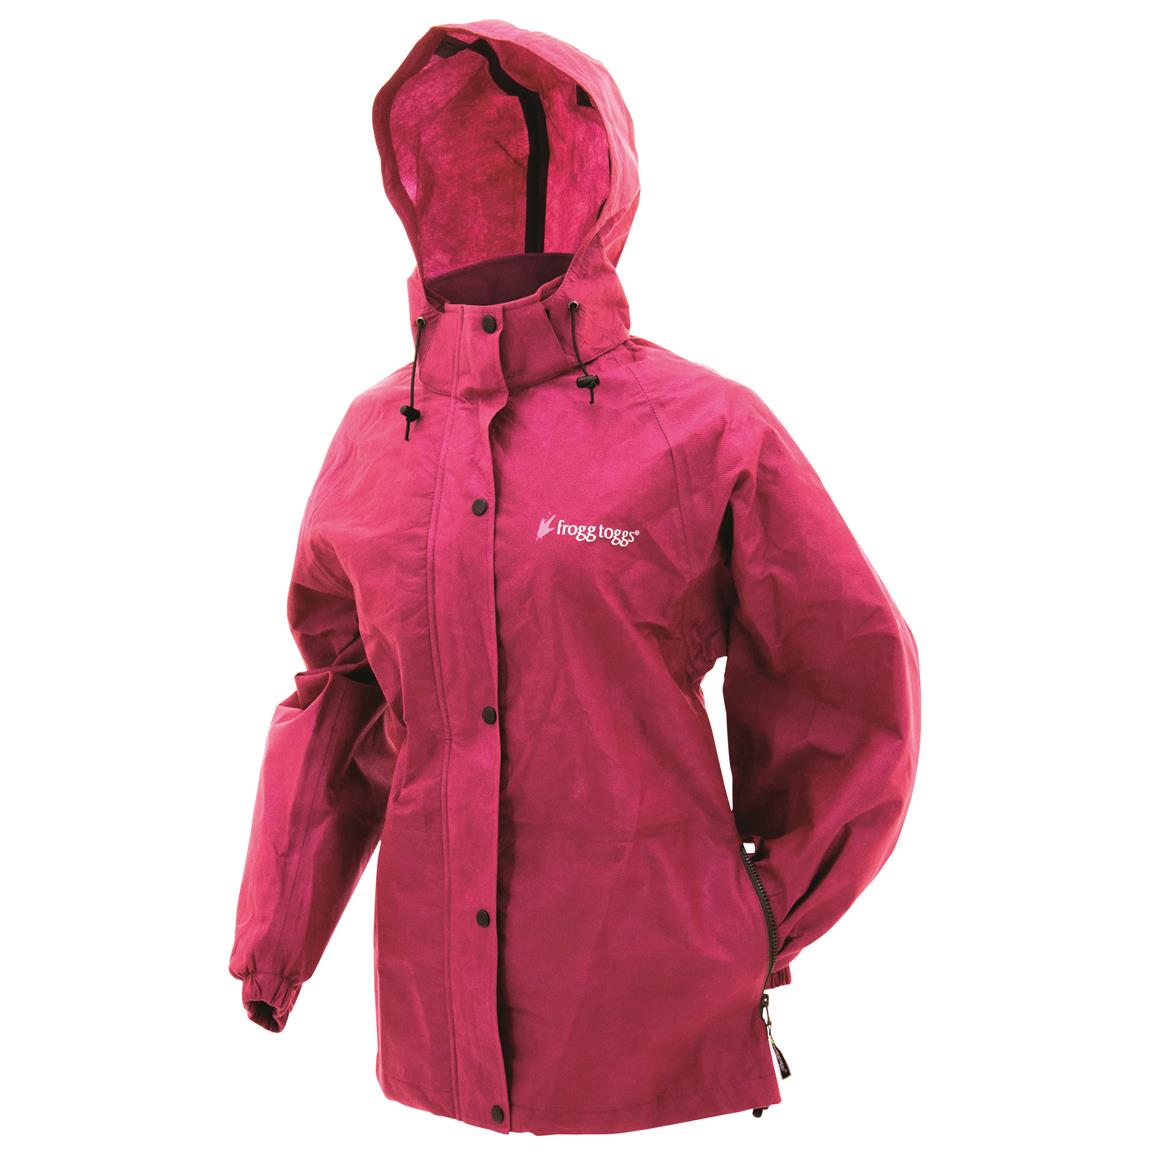 frogg toggs Women's Waterproof Pro Action Jacket - 697146, Rain Jackets ...